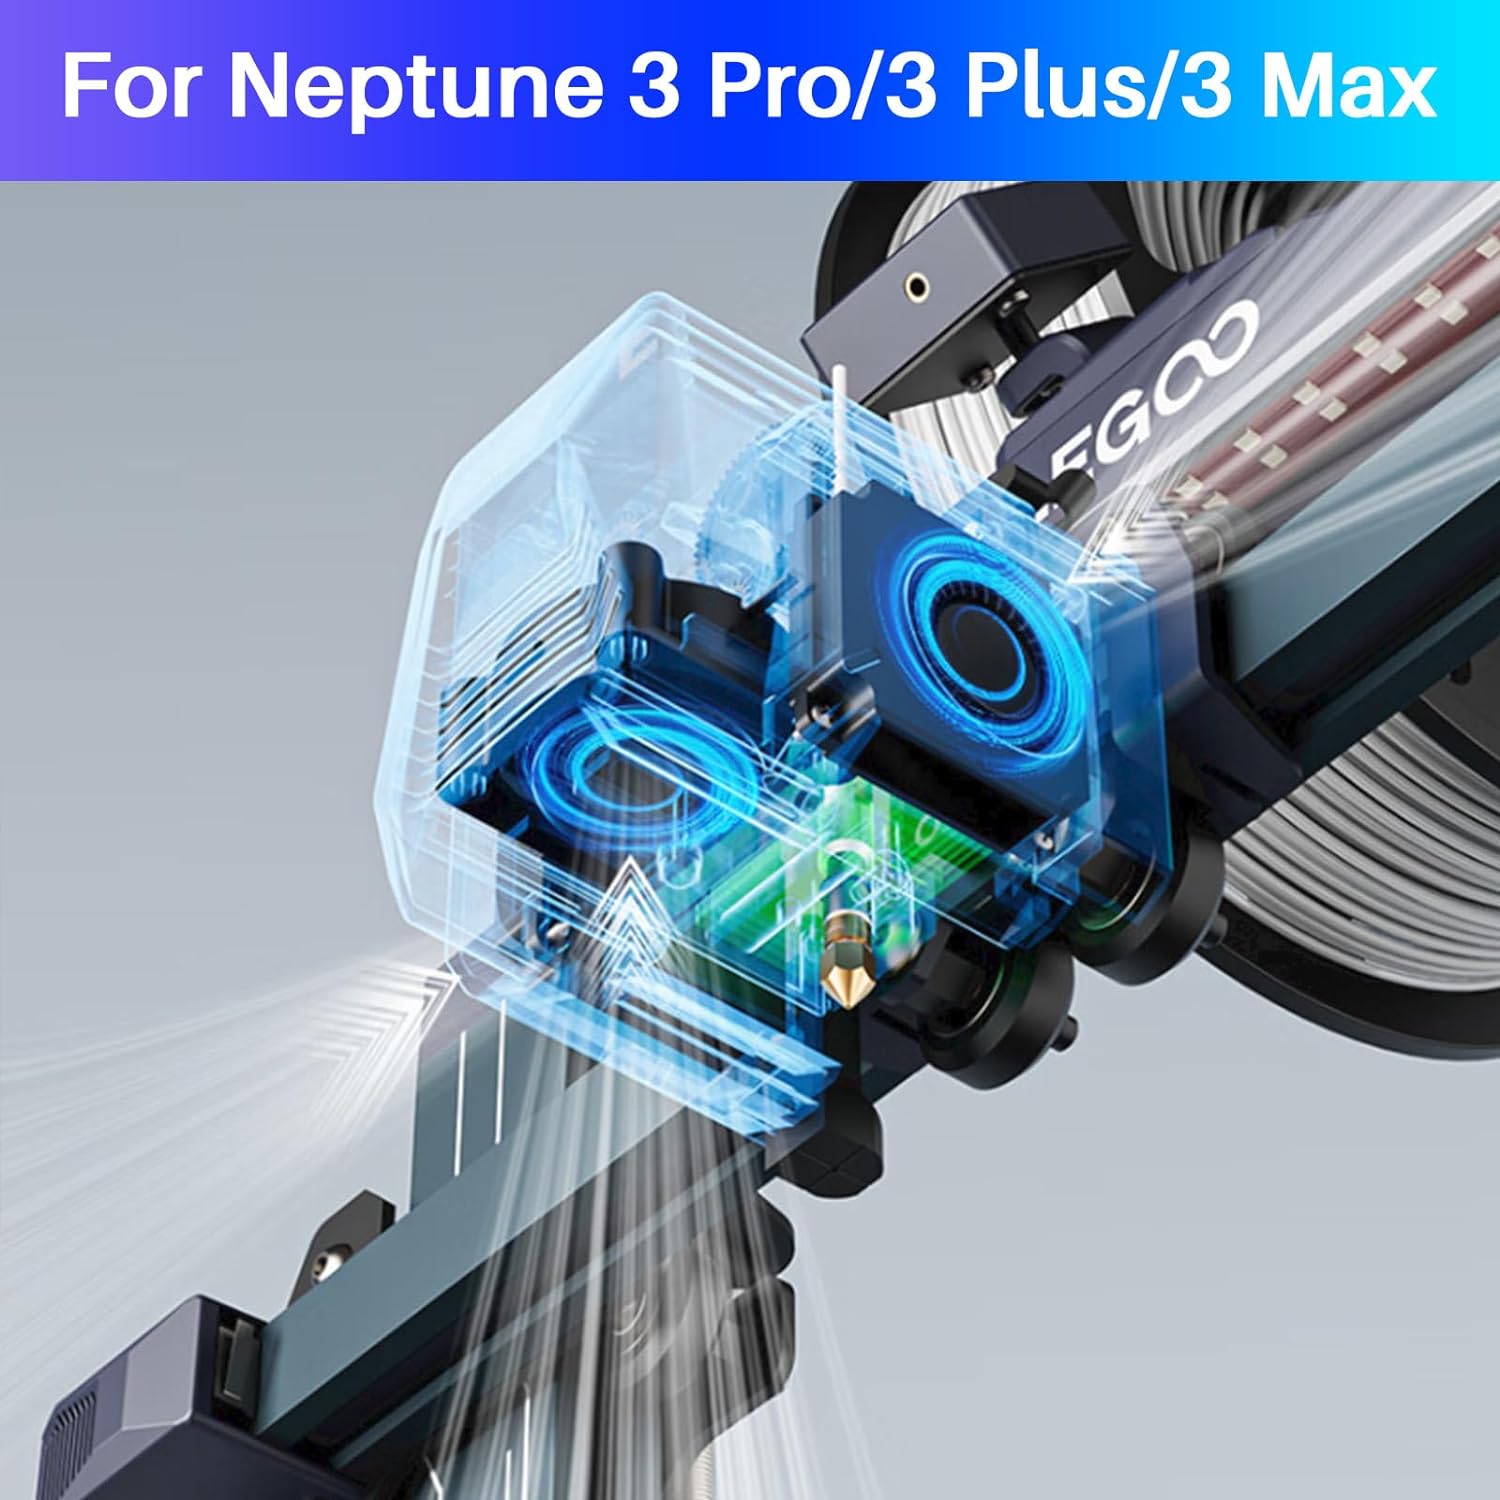 elegoo-3d-printer-extruder-for-neptune-3-pro3-plus3-max-3d-printer-fully-assemble-dual-gear-direct-drive-extruder-elegoo-1 ELEGOO 3D Printer Extruder Review